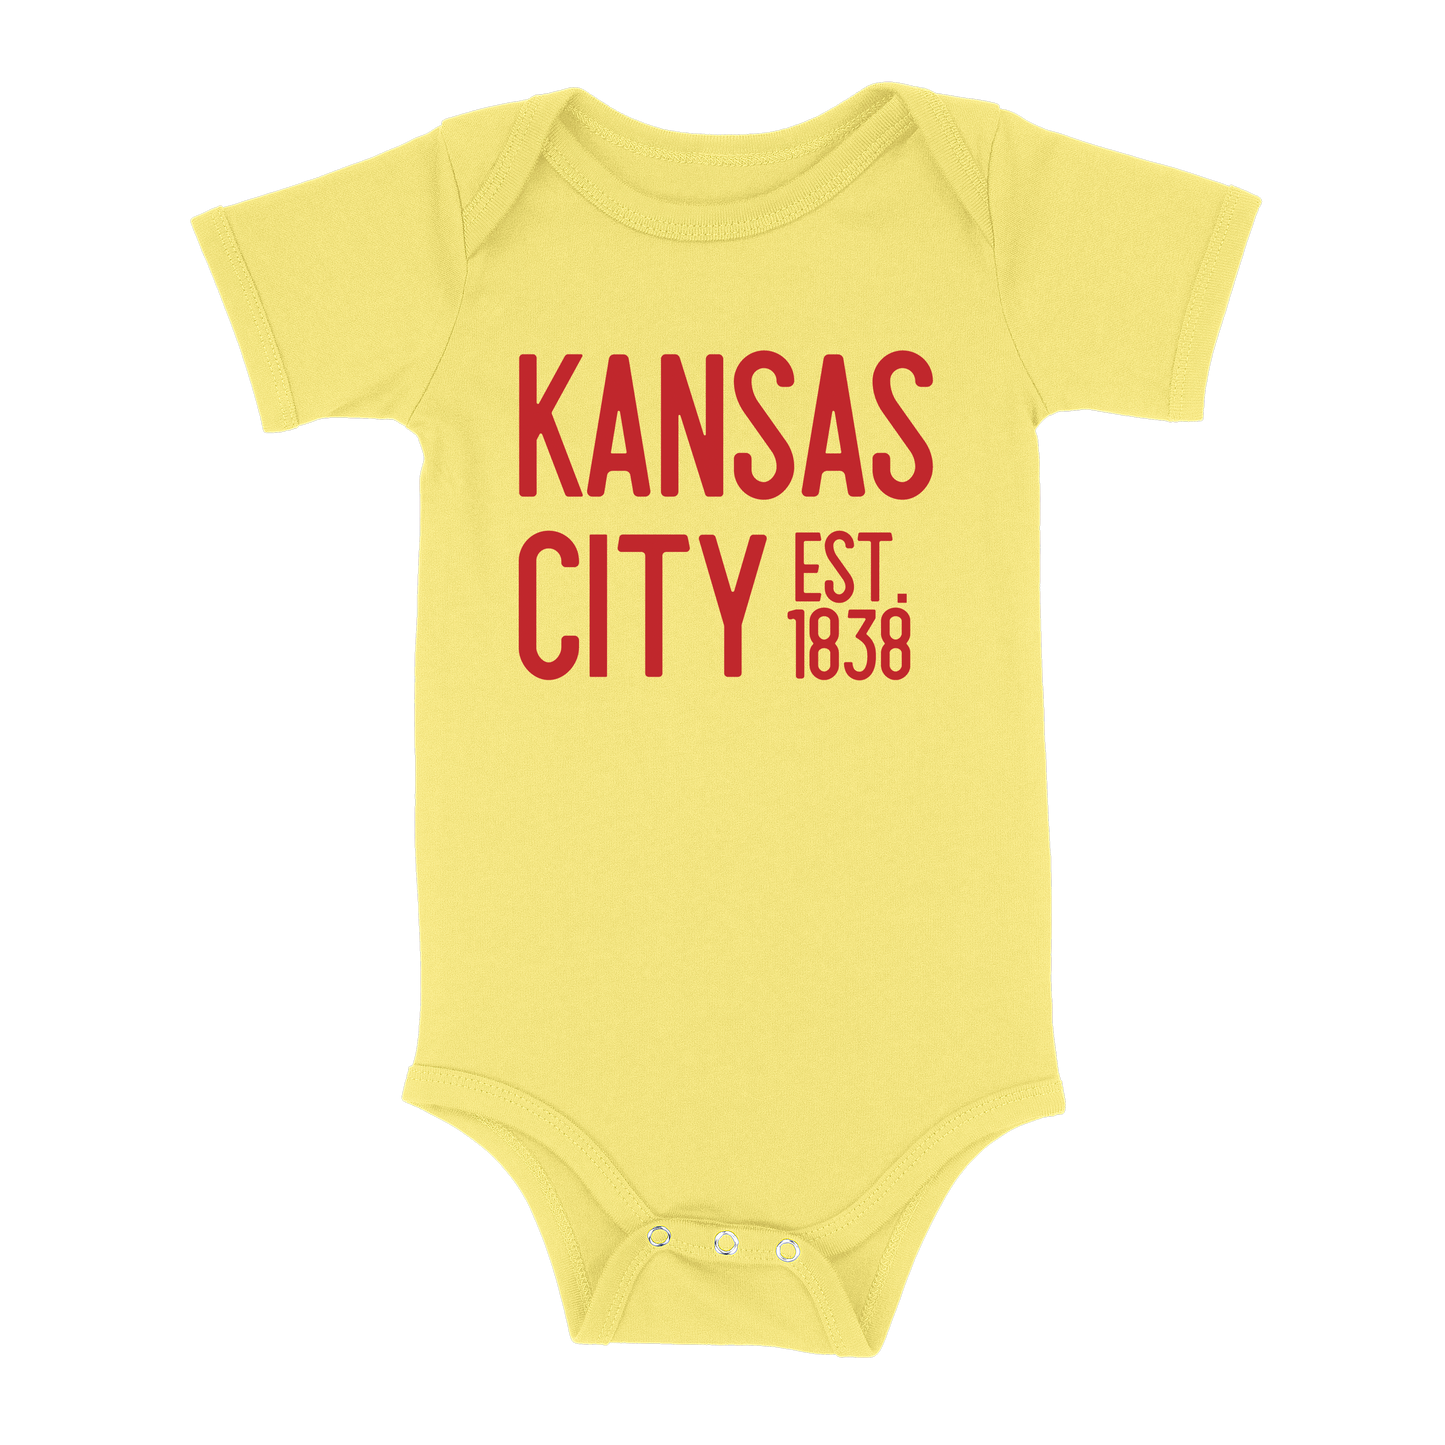 Kansas City EST 1838 Baby One Piece | Yellow